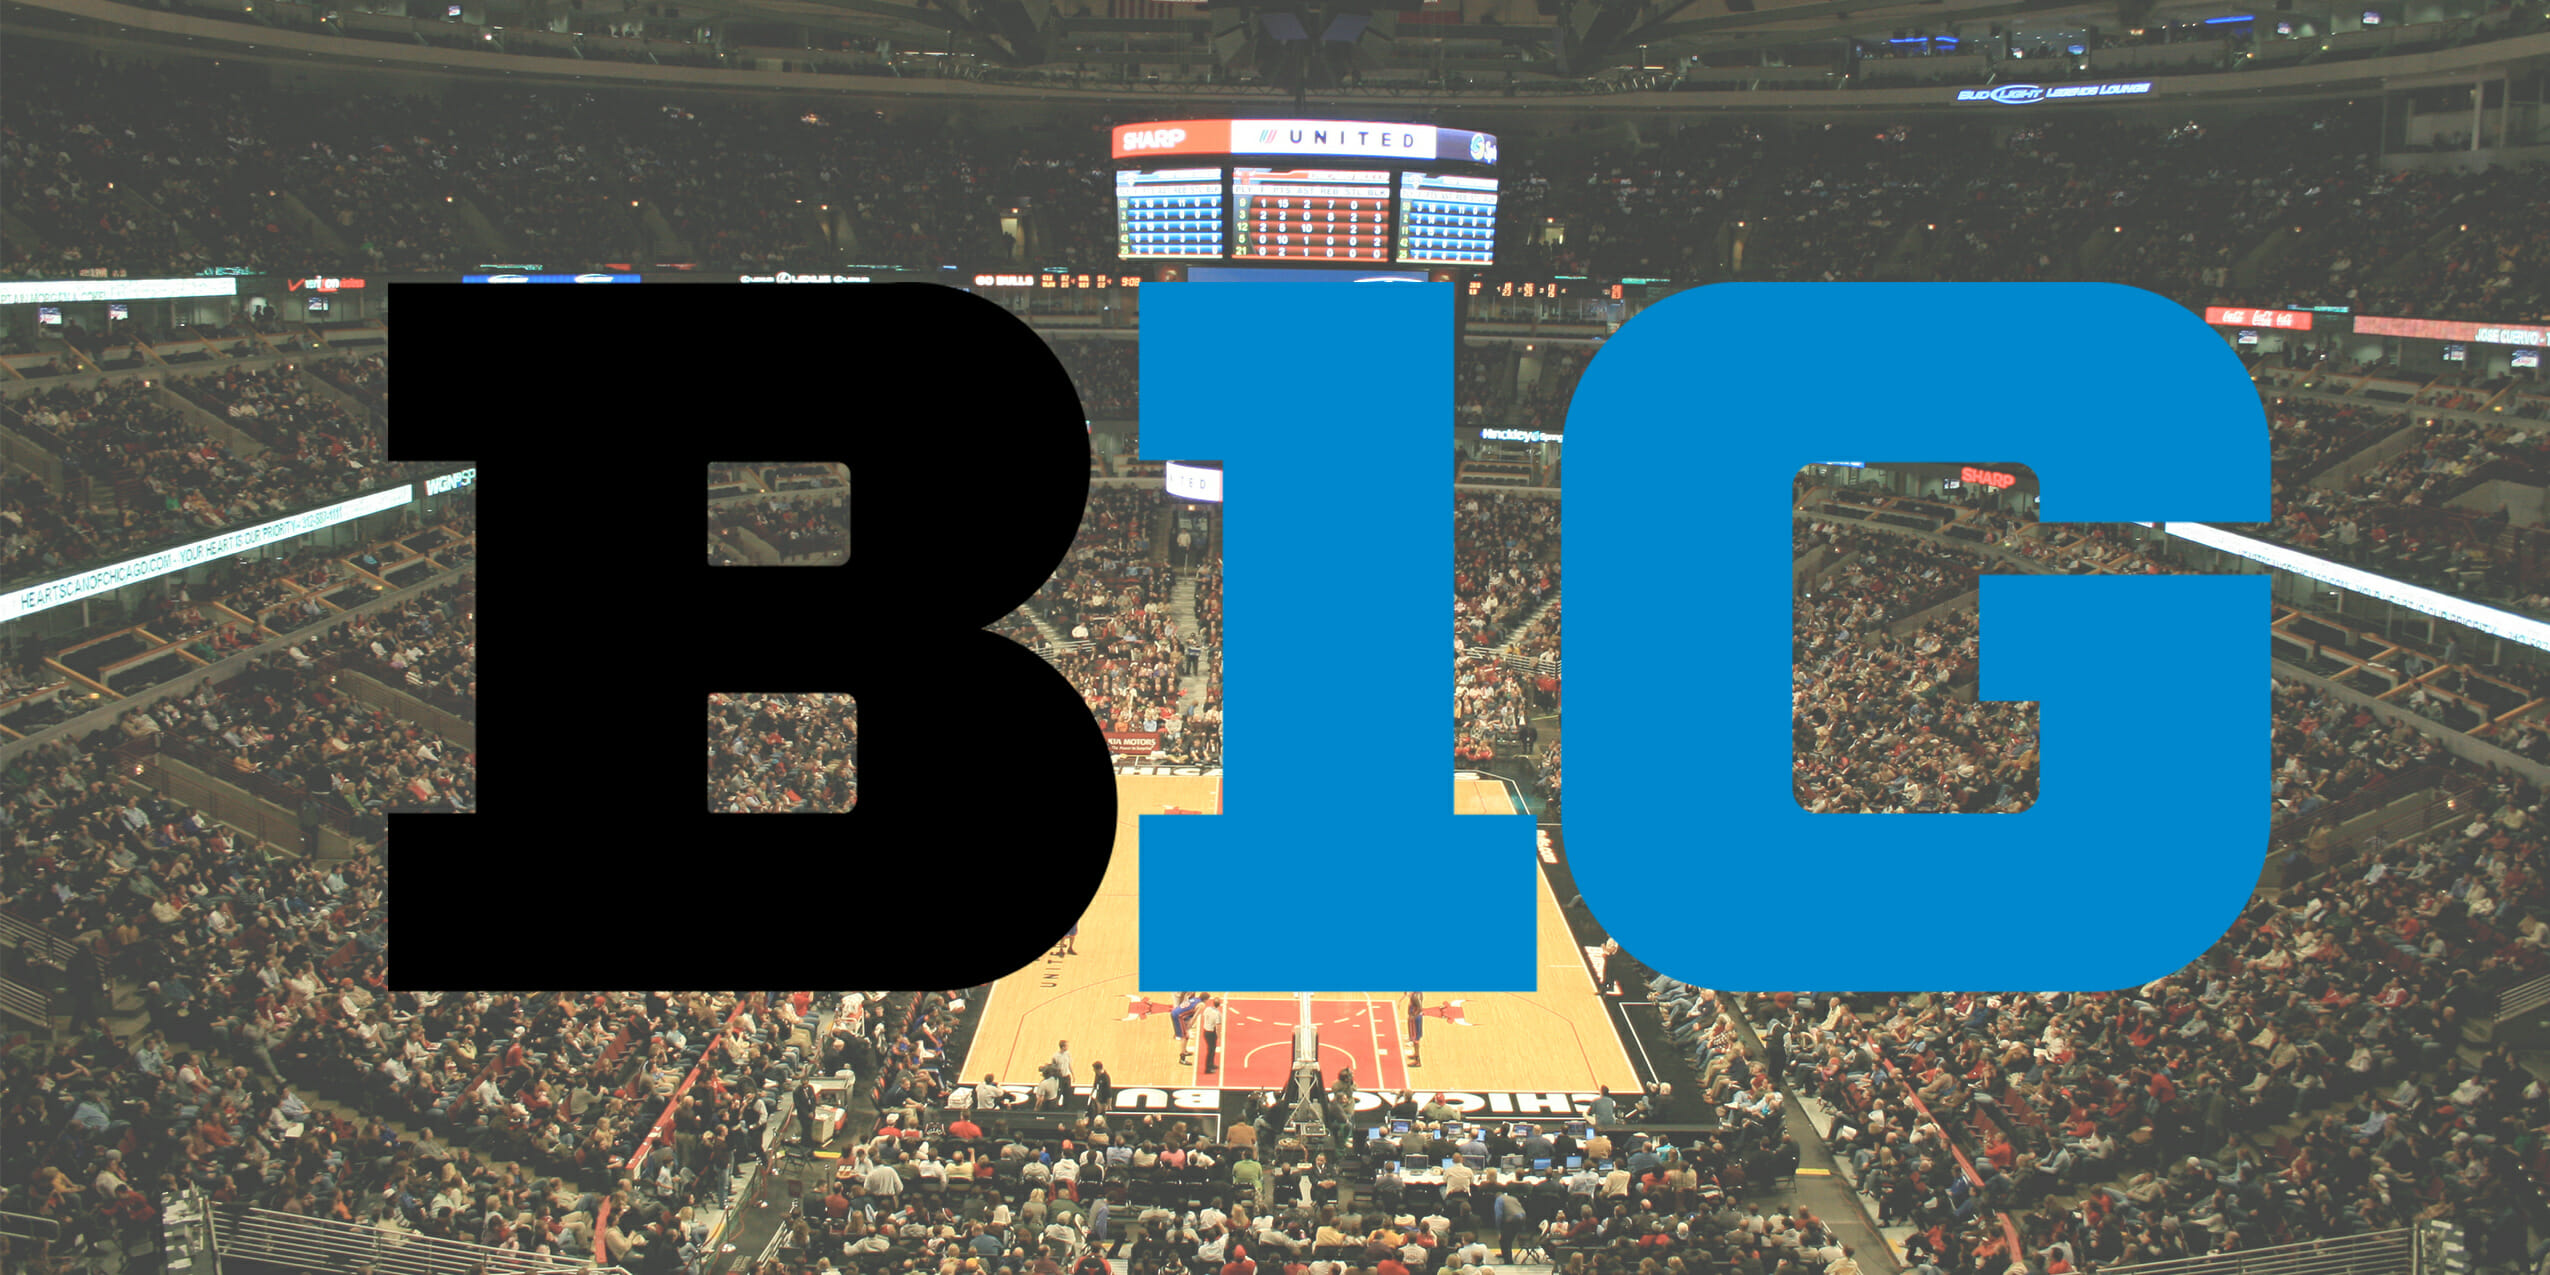 2019 Big Ten Tournament Live Stream Watch Basketball Games for Free